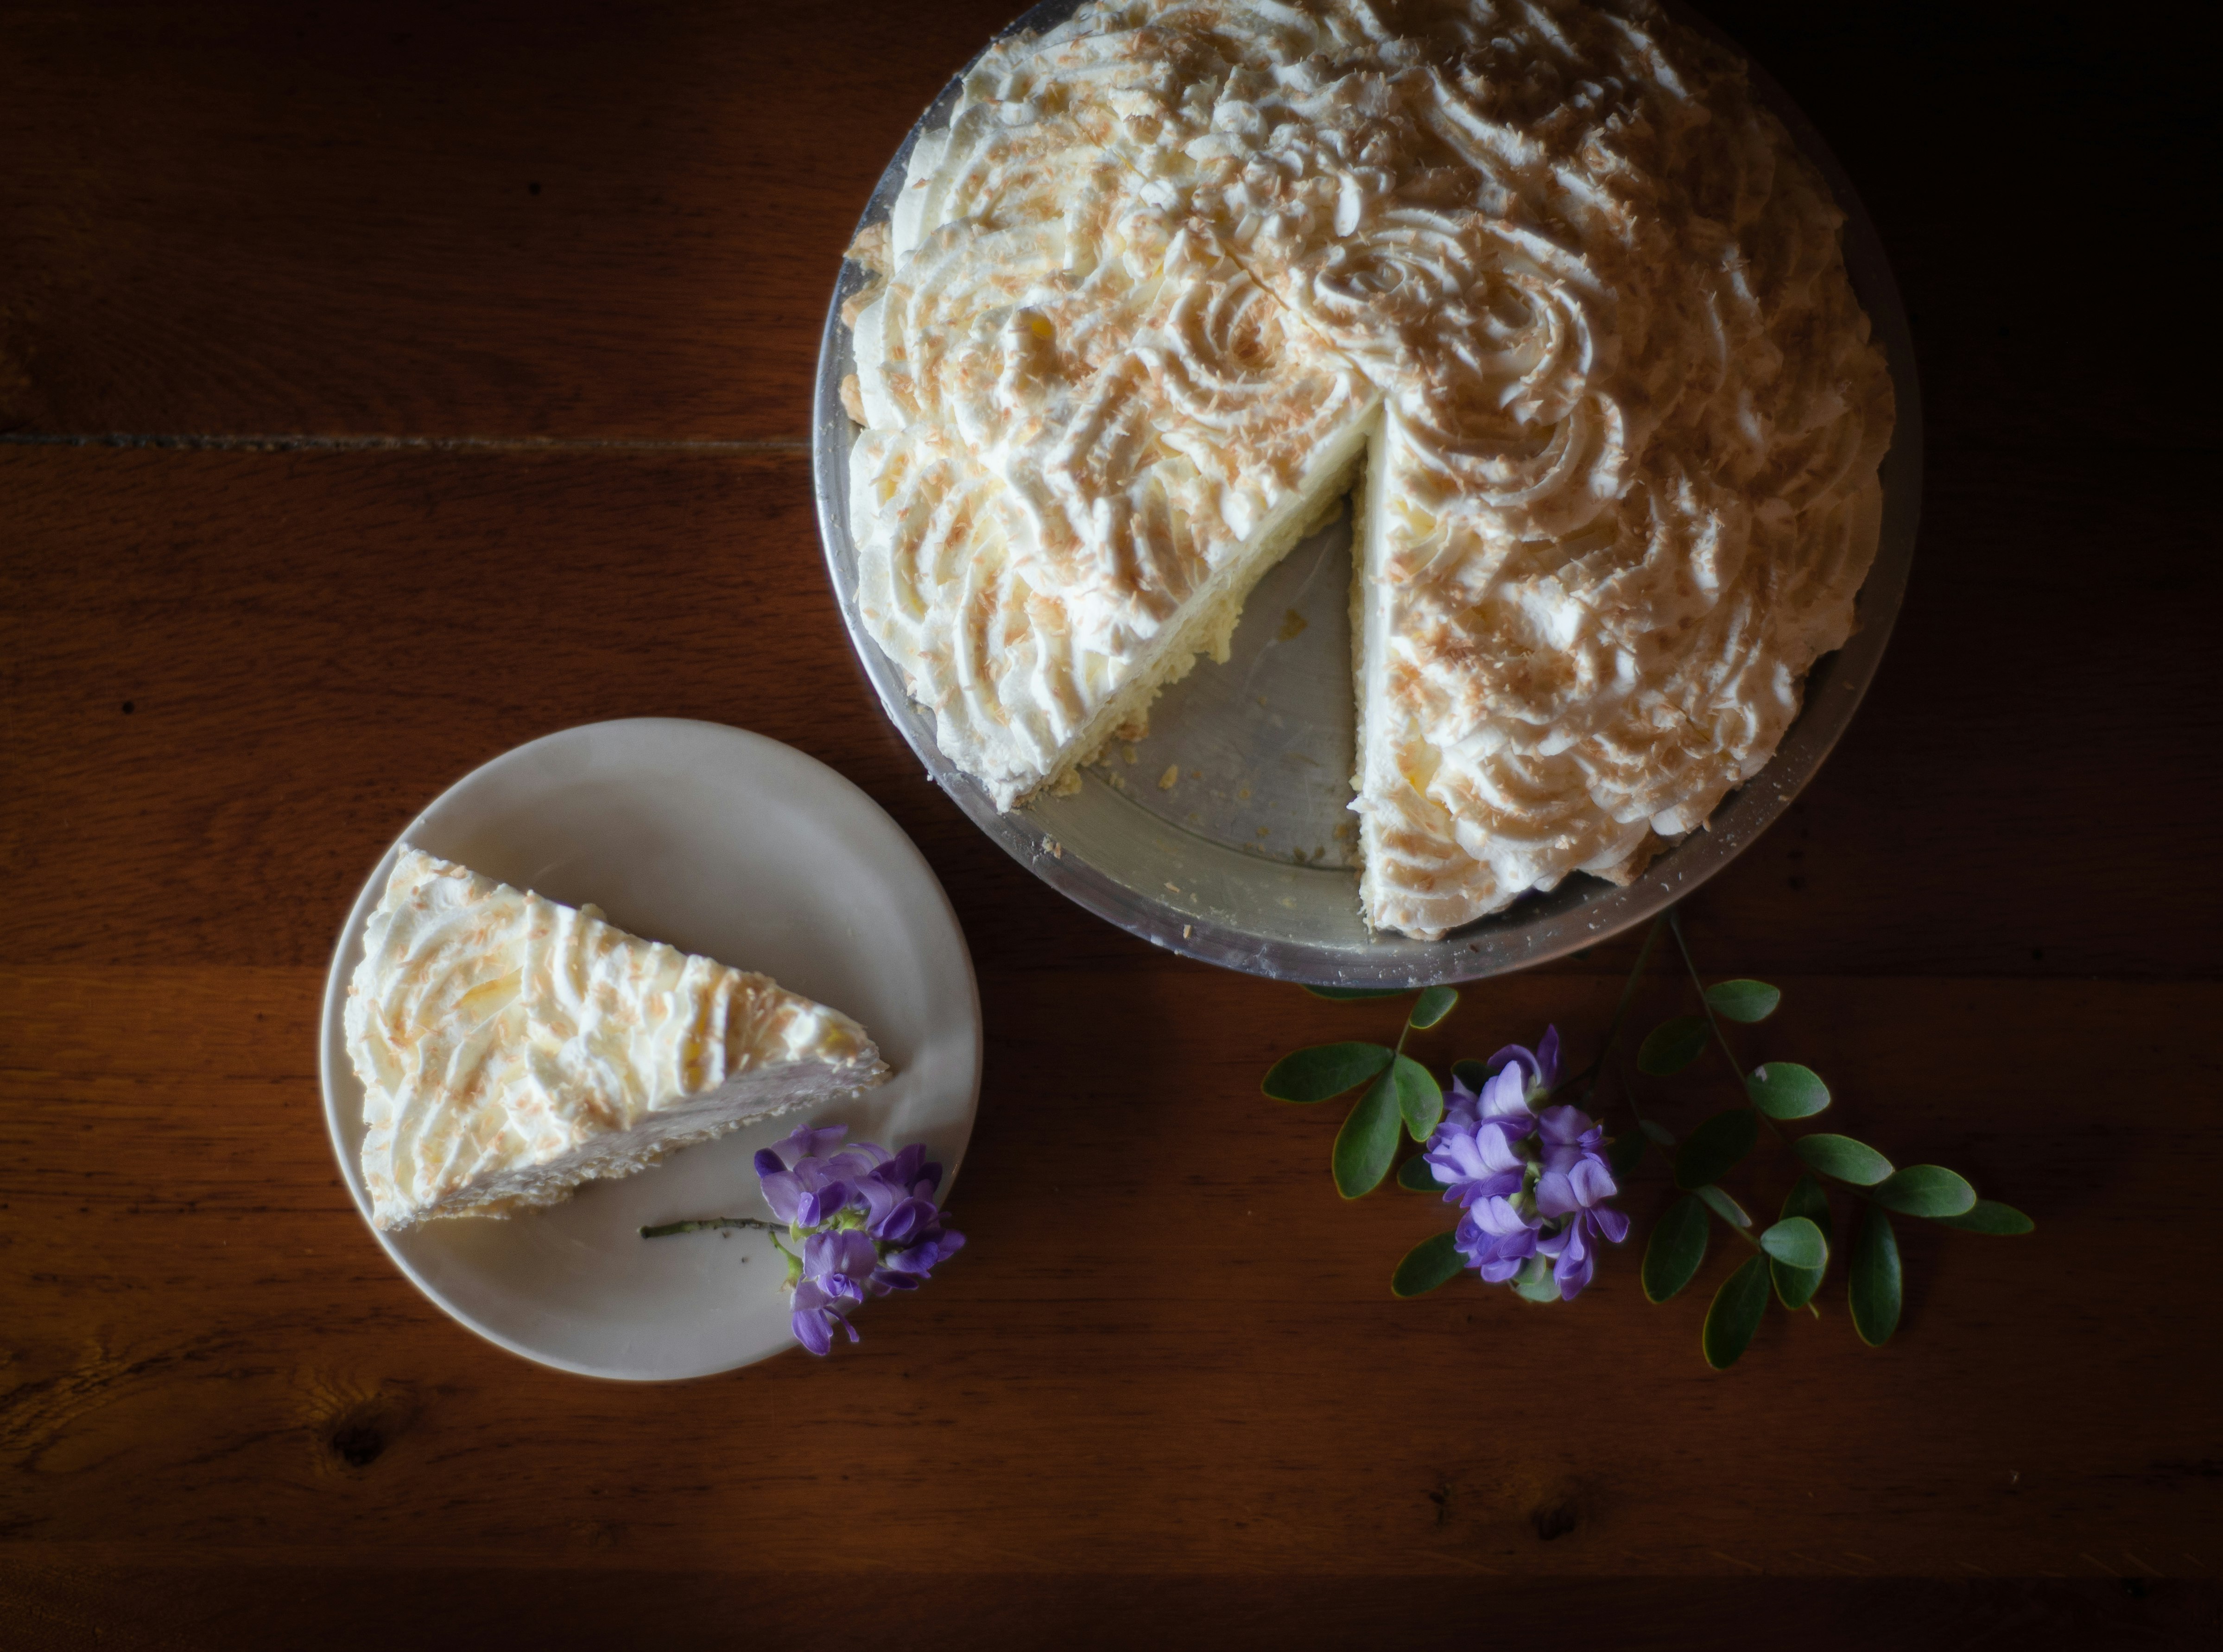 A slice of coconut cream pie. Dessert for everyone.